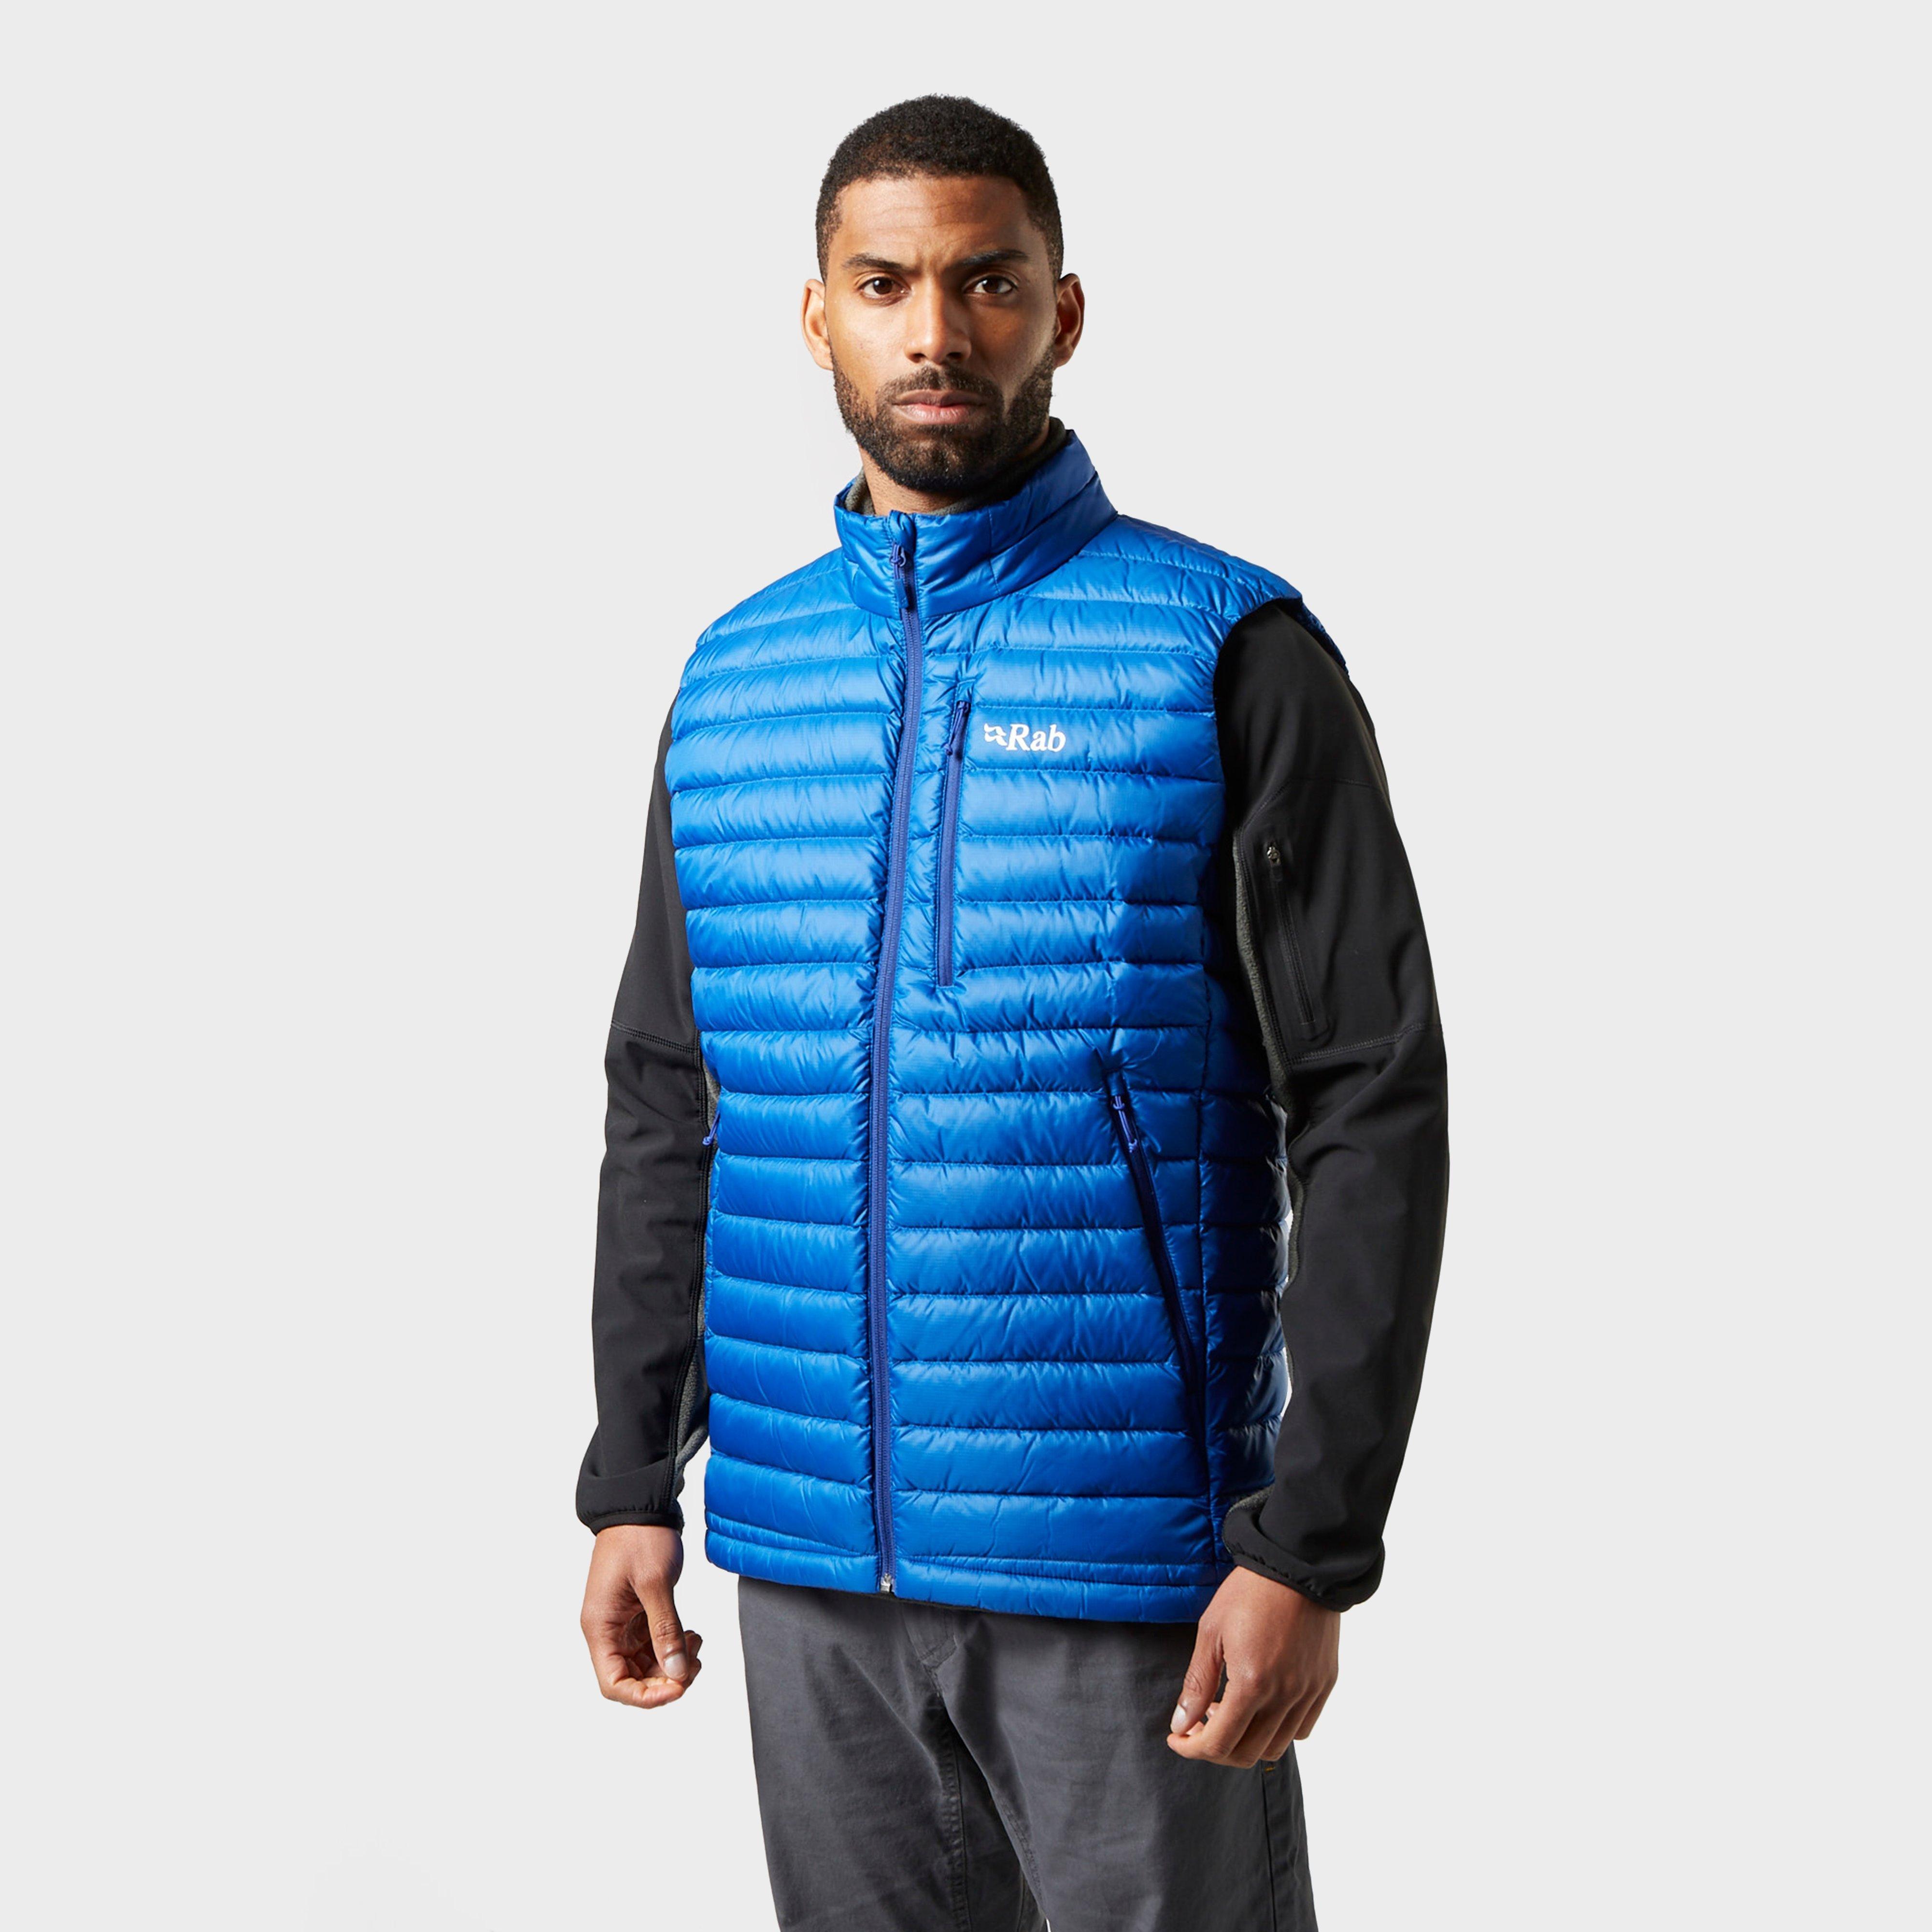 Rab Microlight Vest – Men’s | jacketcompare.co.uk